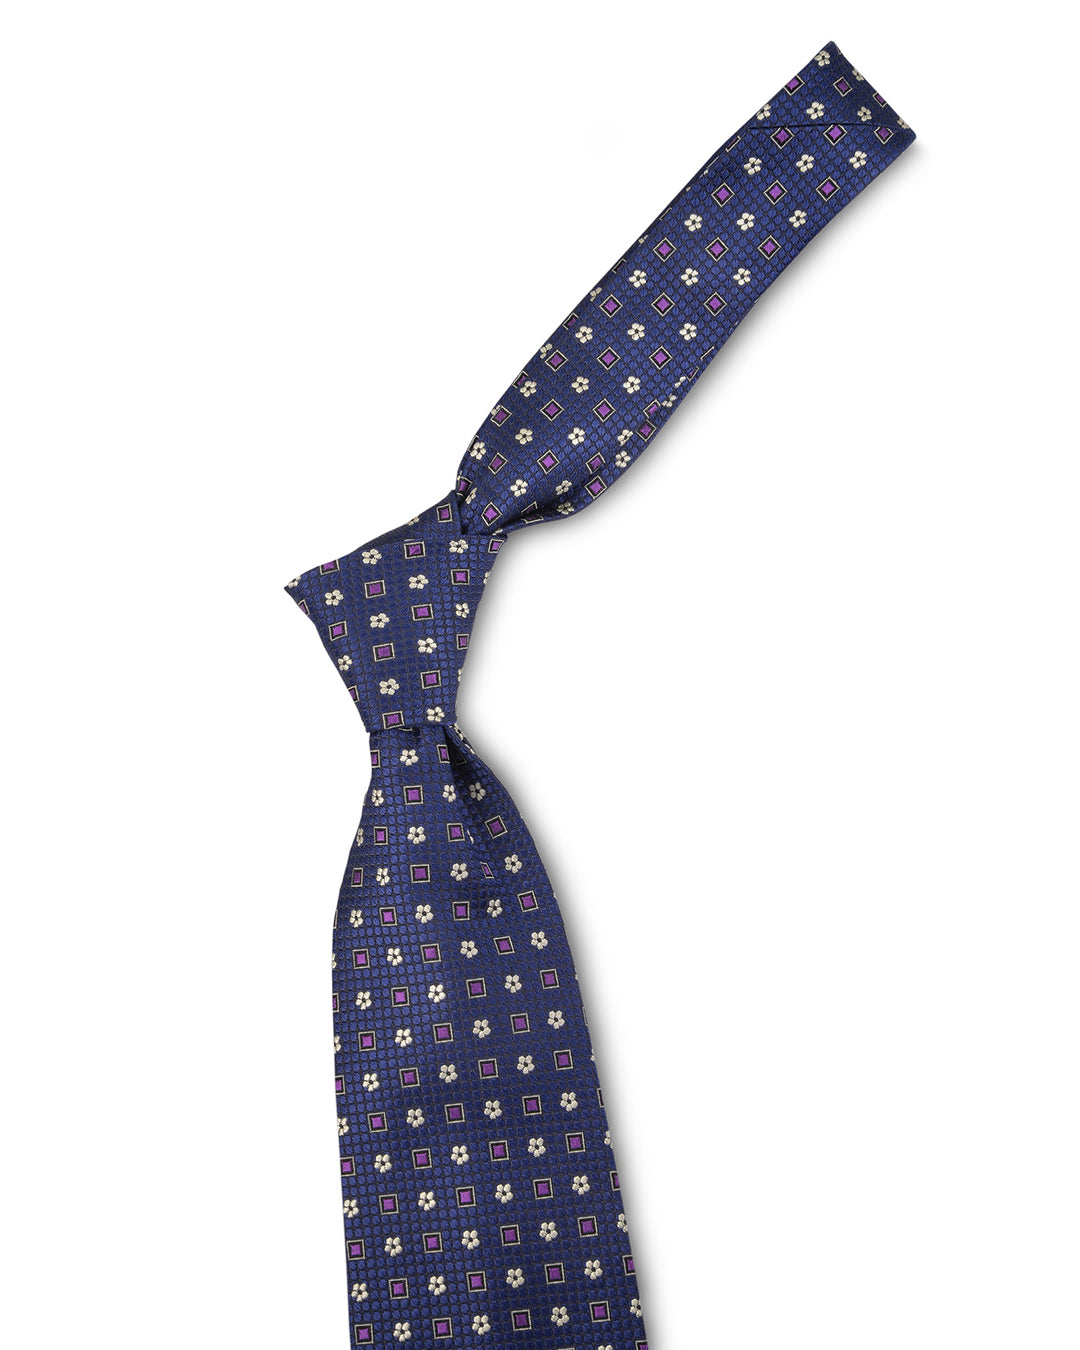 Alternate Square Floral Purple Tie